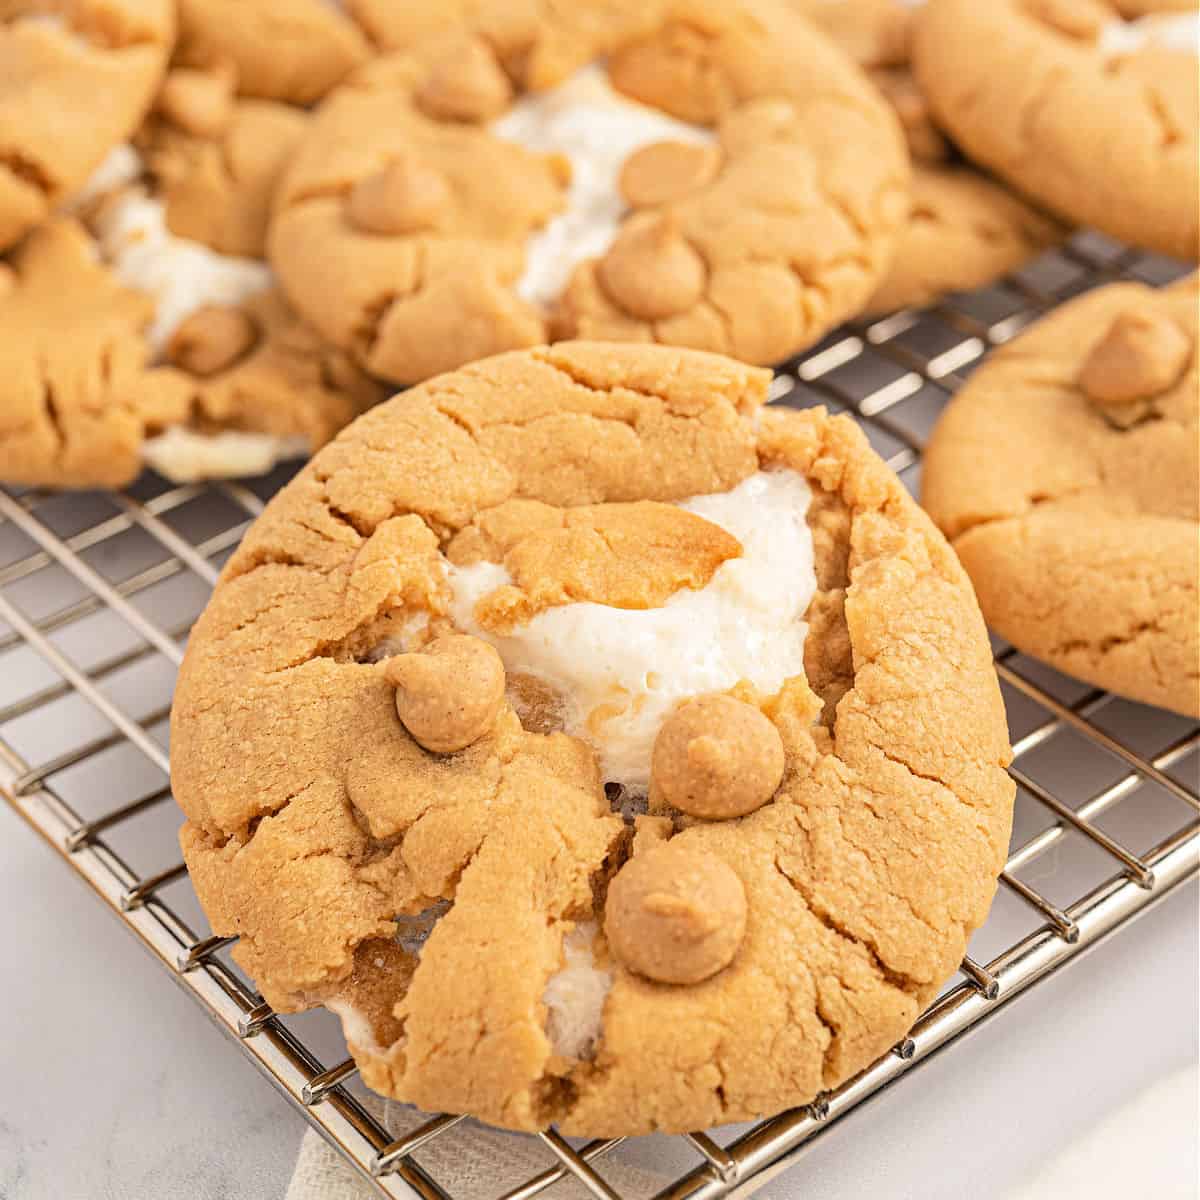 Homemade Marshmallow Fluff Recipe - Shugary Sweets